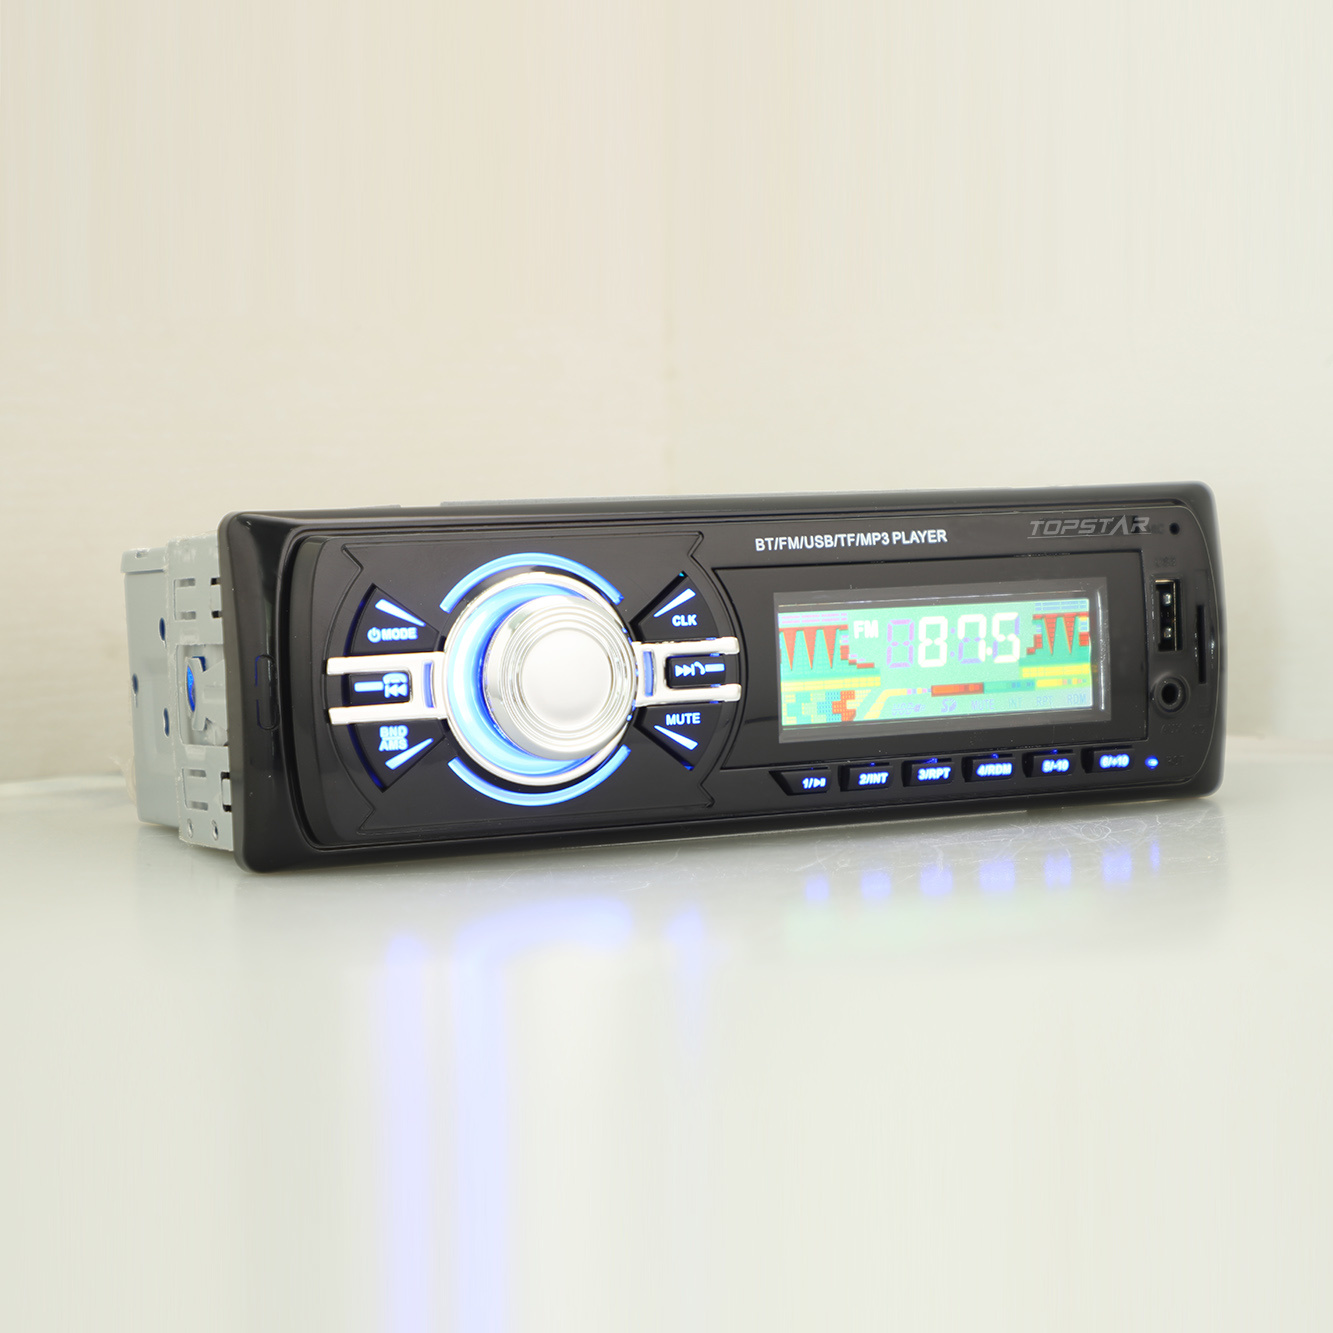 MP3-Player, Auto-Ladegerät, Auto-Audio, Auto-Stereo-MP3-Player, MP3 auf Auto-MP3-Player für Auto-Stereo, Auto-MP3-Player mit FM